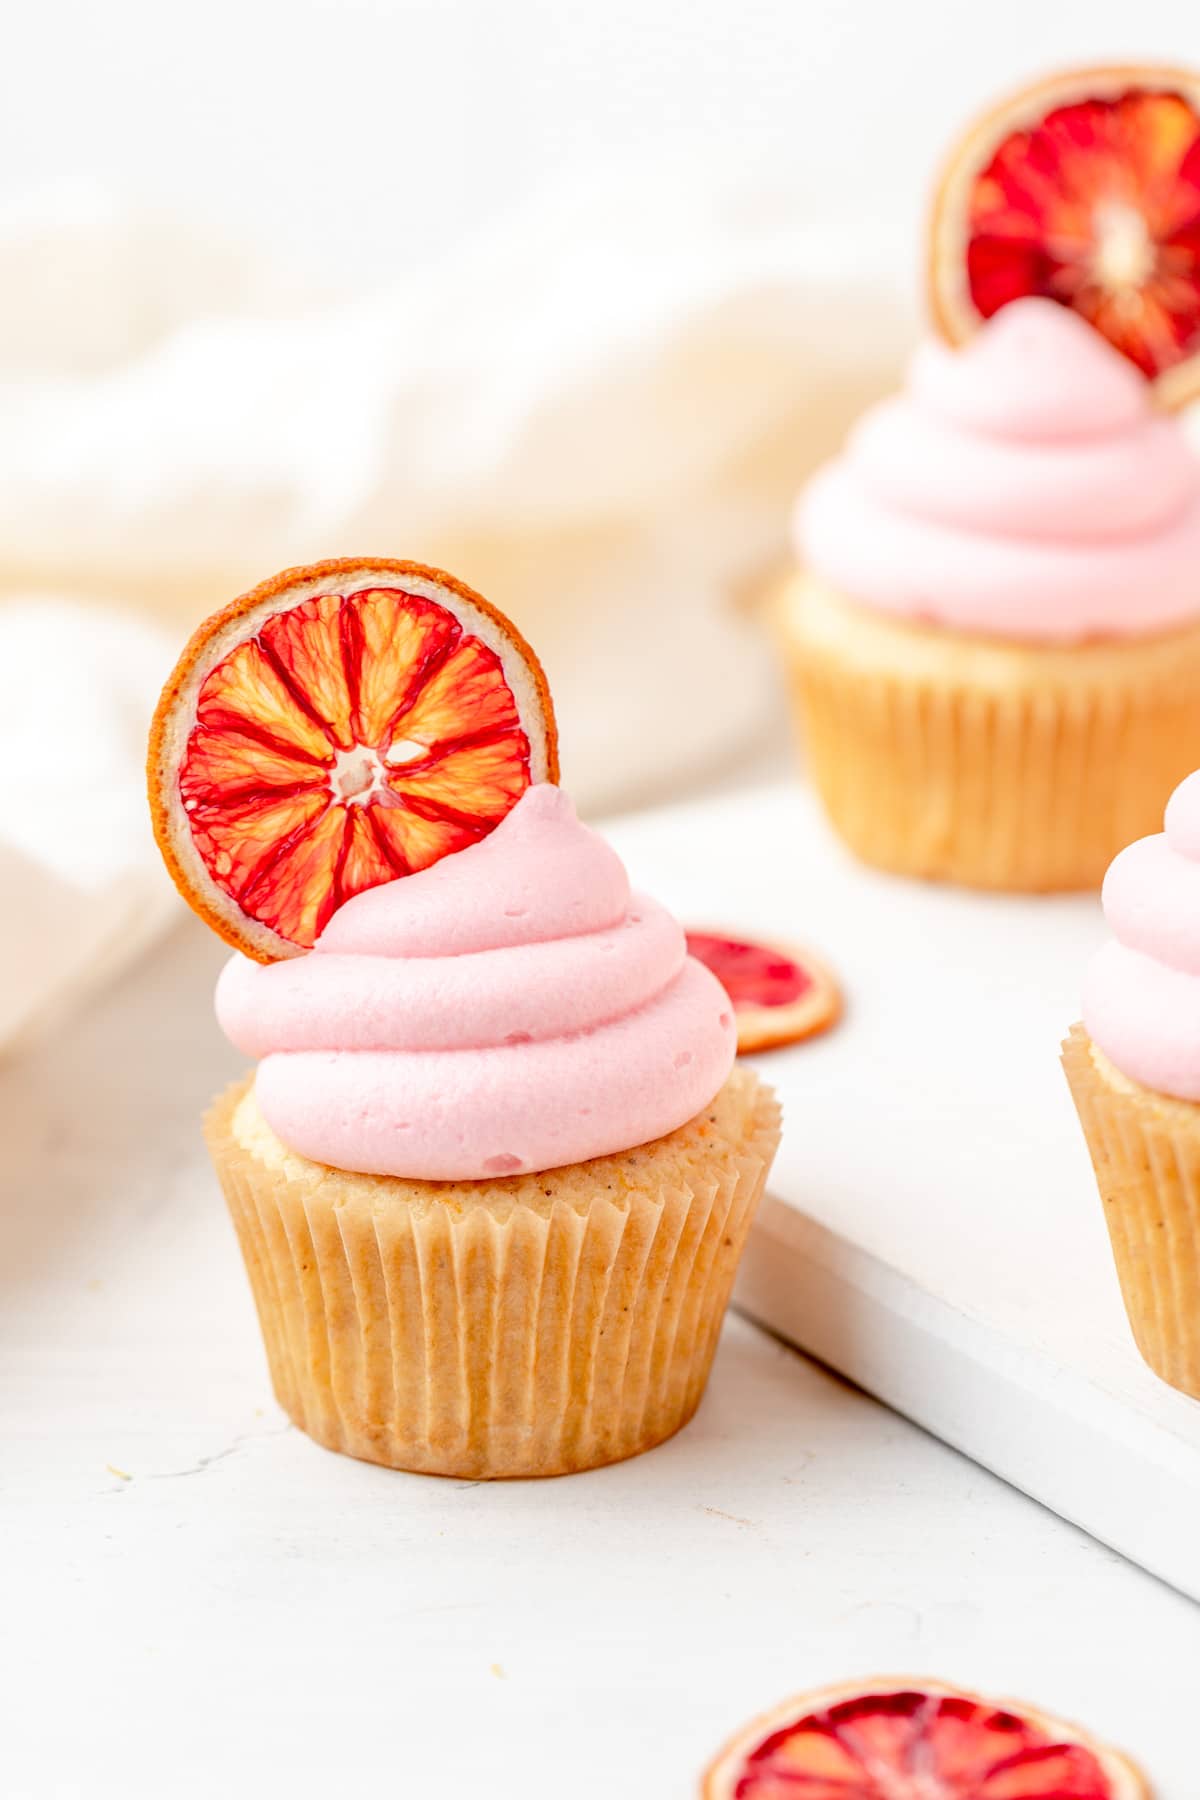 blood orange slices on cupcakes